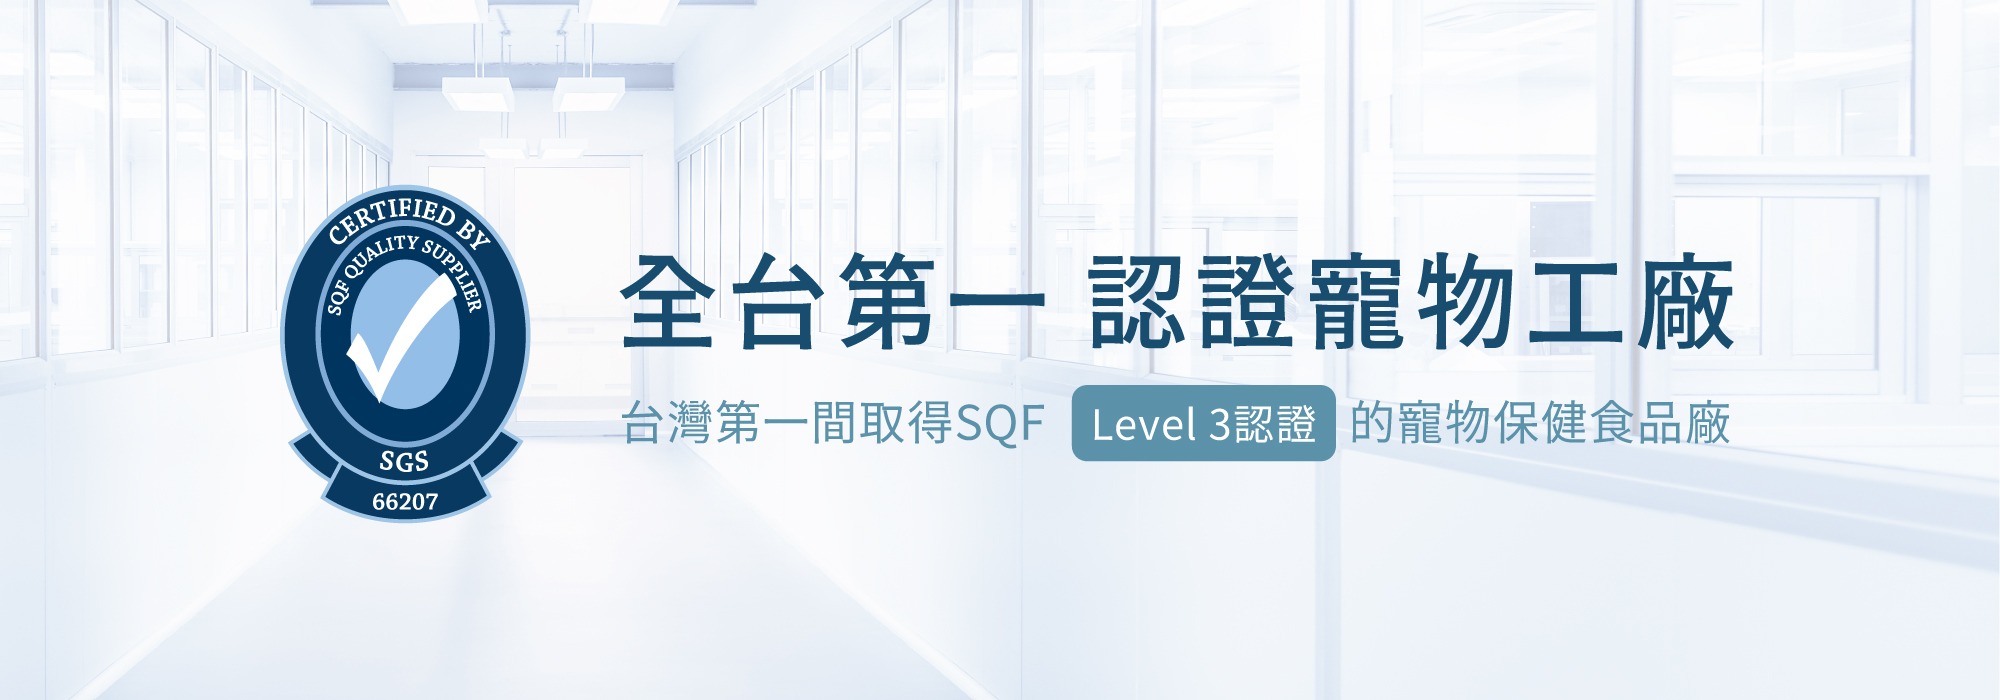  wel-pet 逢源生技為台灣第一間取得SQF Level 3驗證寵物食品製造商